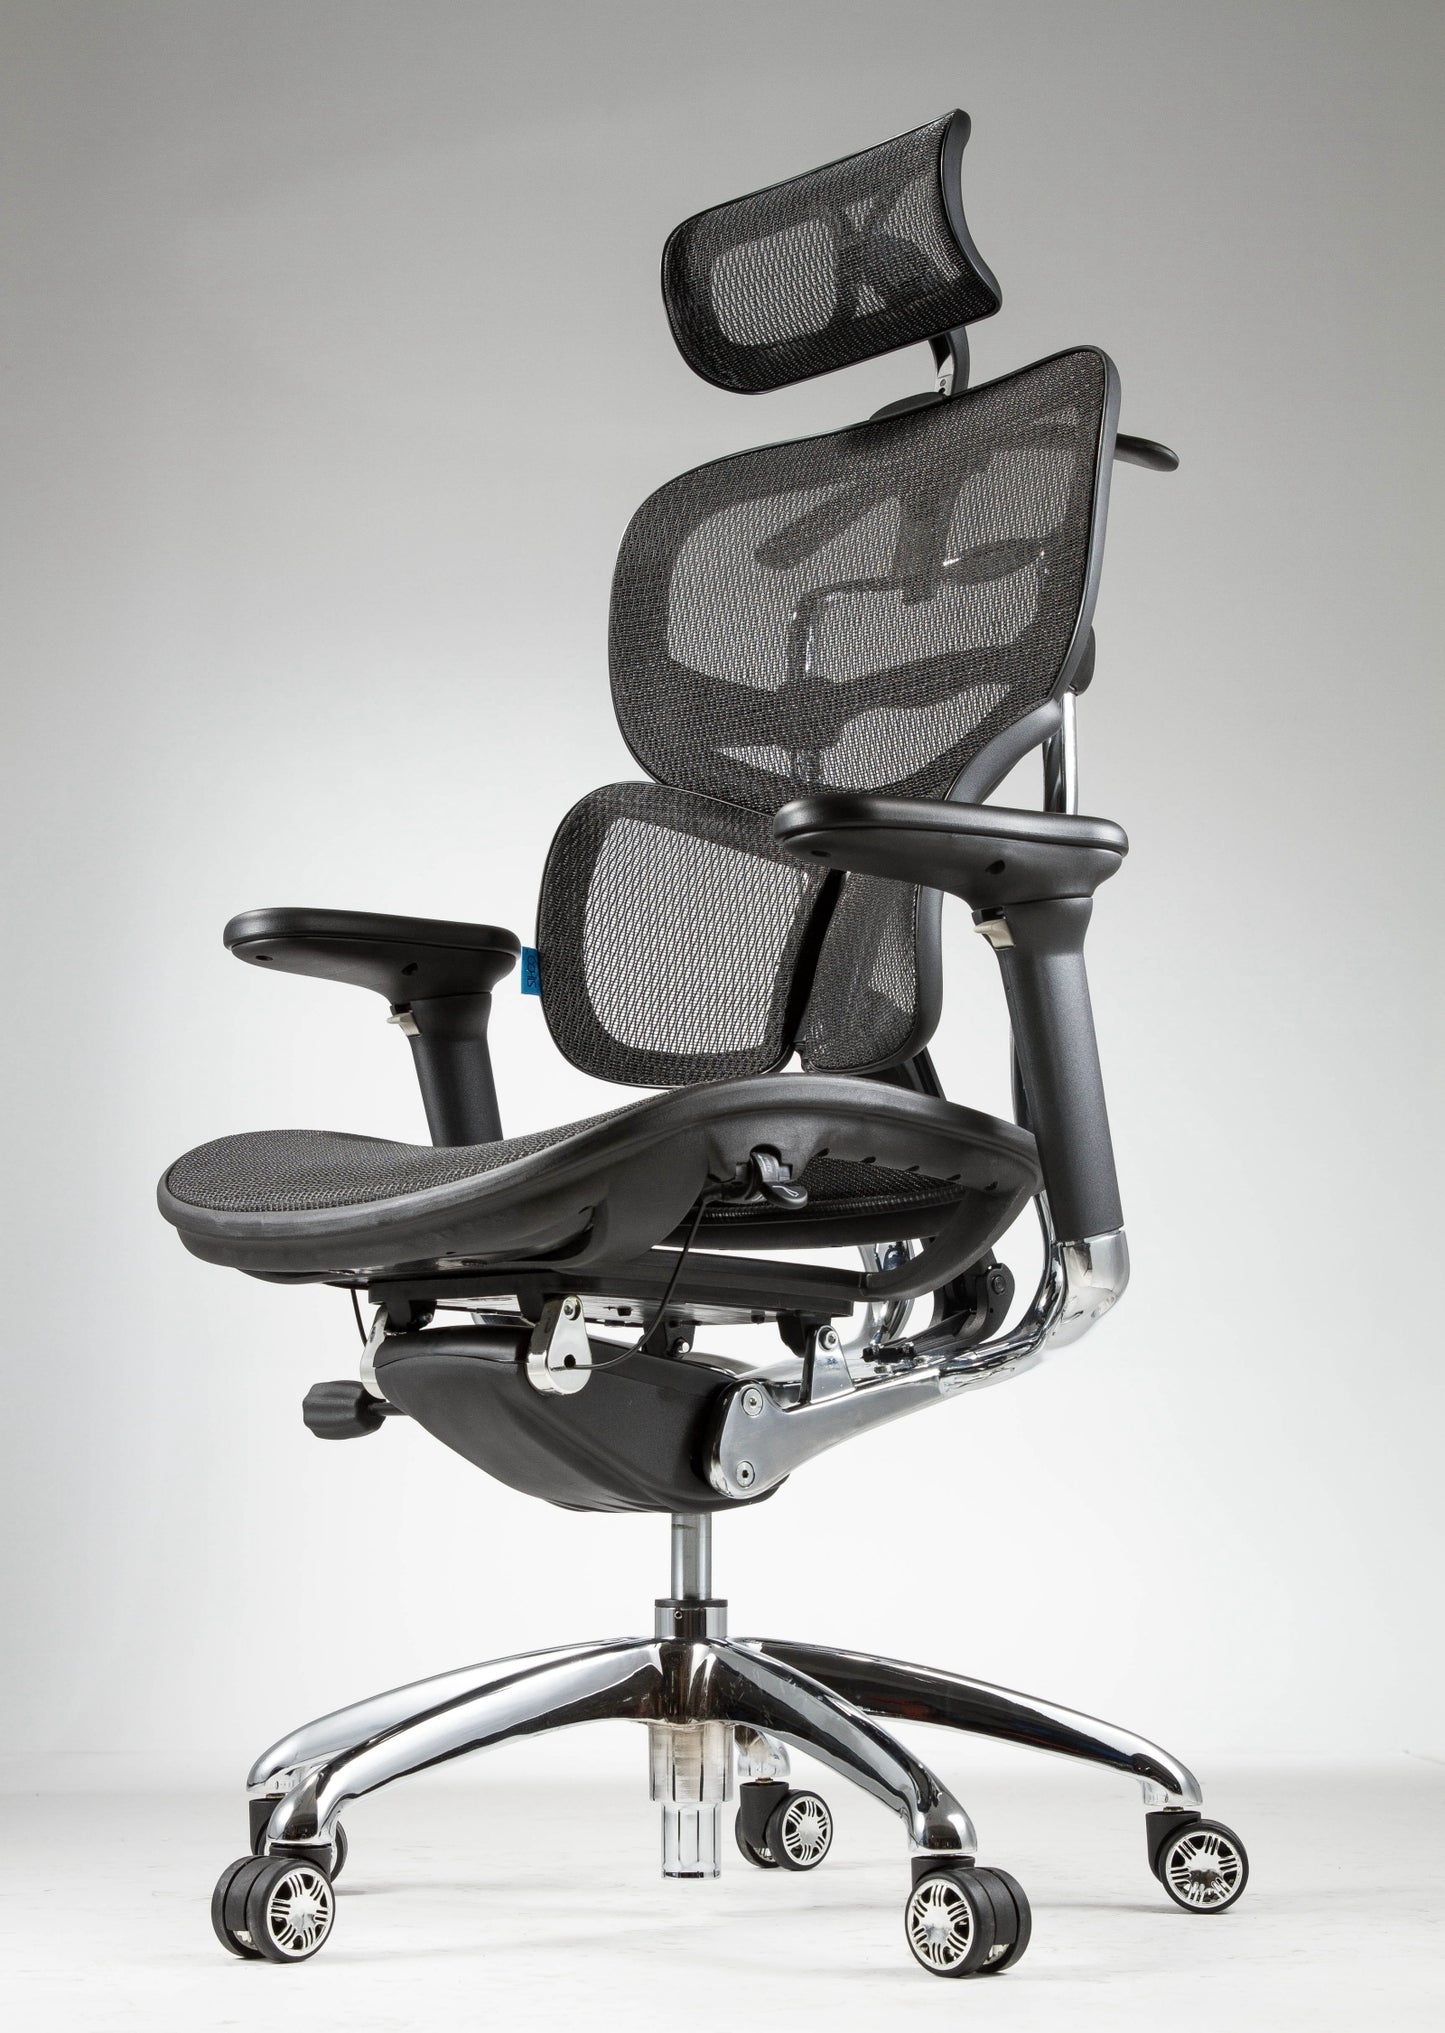 Sihoo A7 Ergonomic Chair